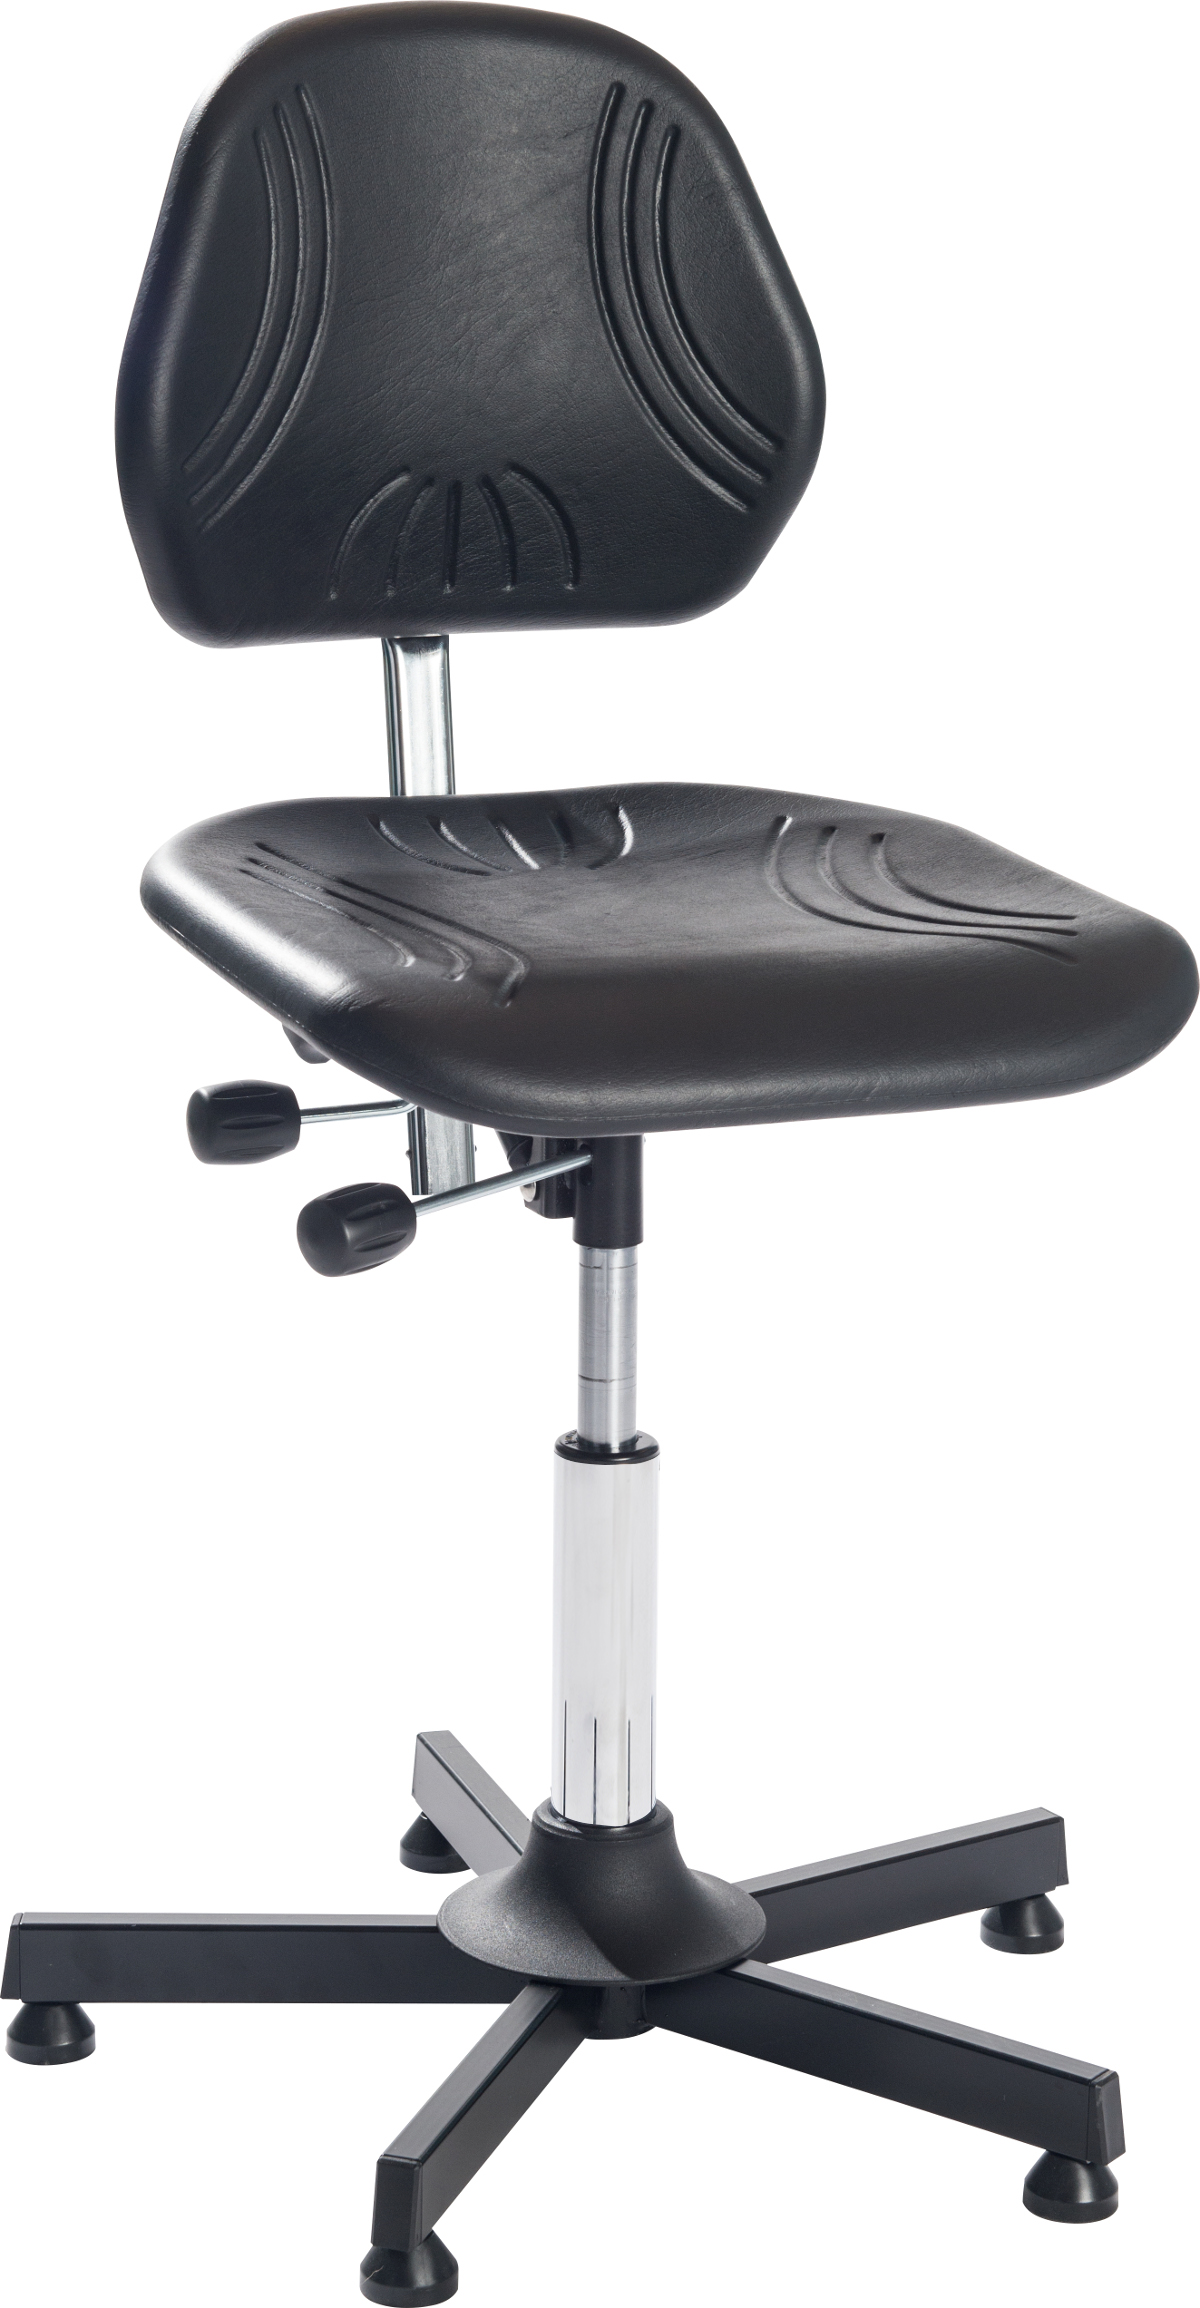 Bott Industrial Chair Adjustable Height 460-590mm - 88601010